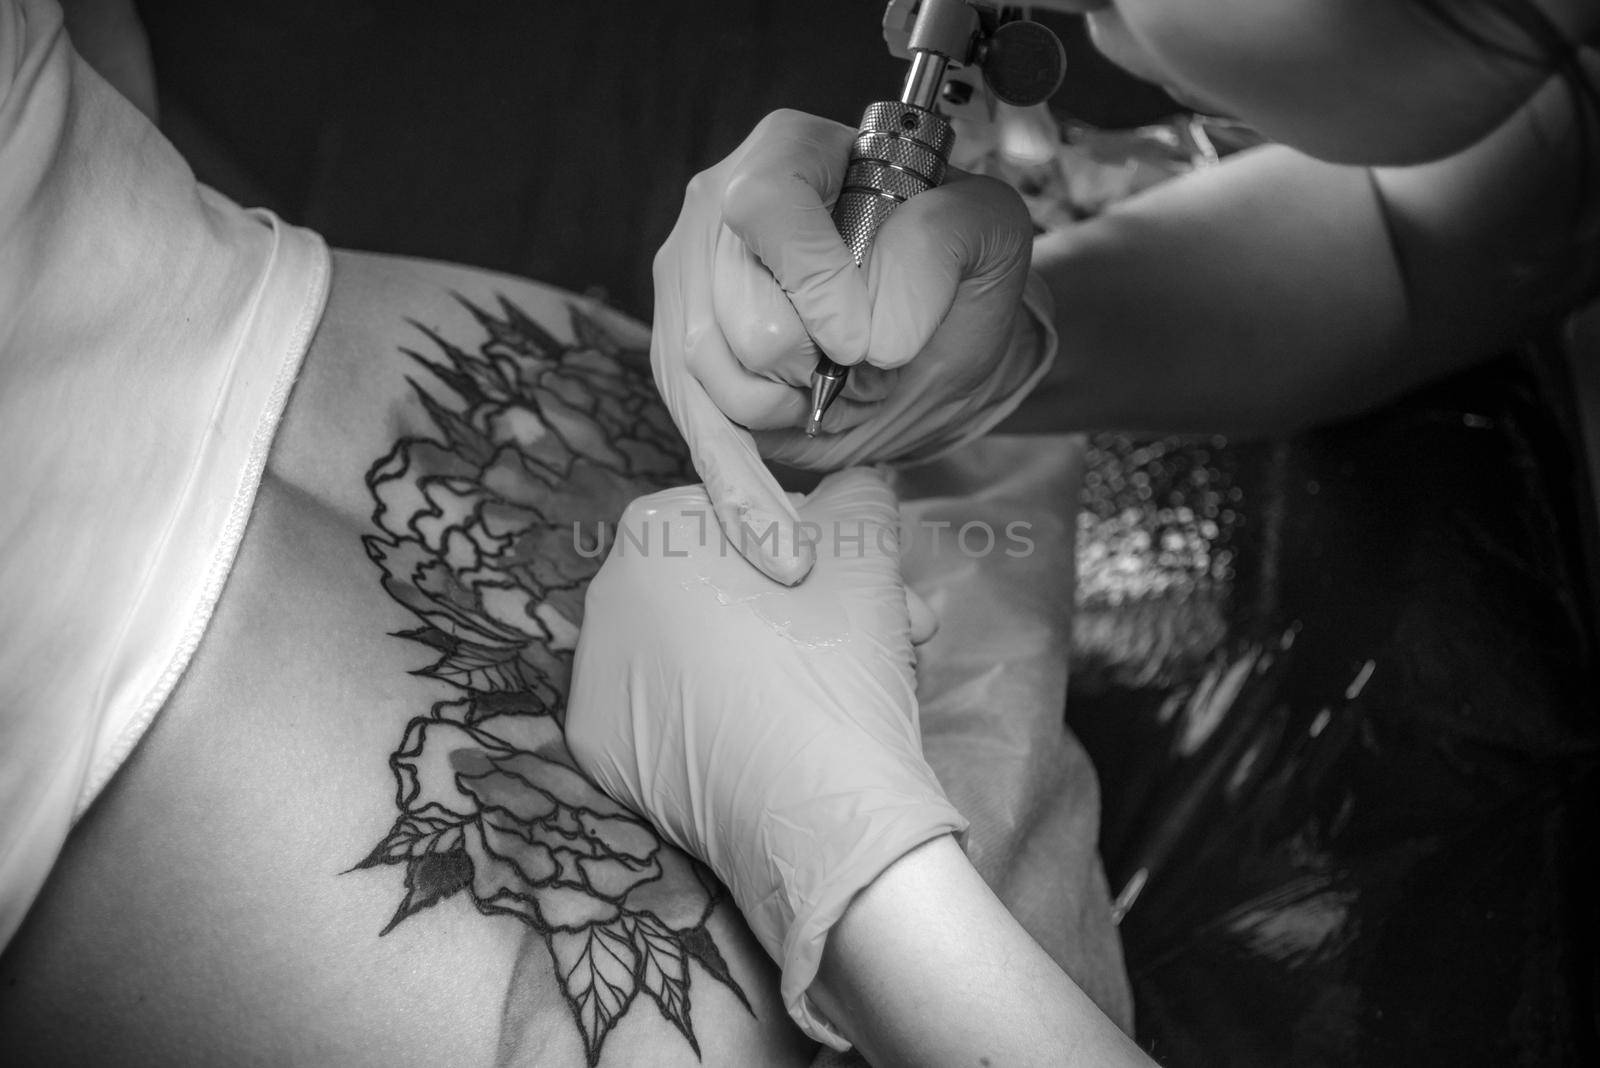 Professional tattoo artist demonstrates the process of getting tattoo.